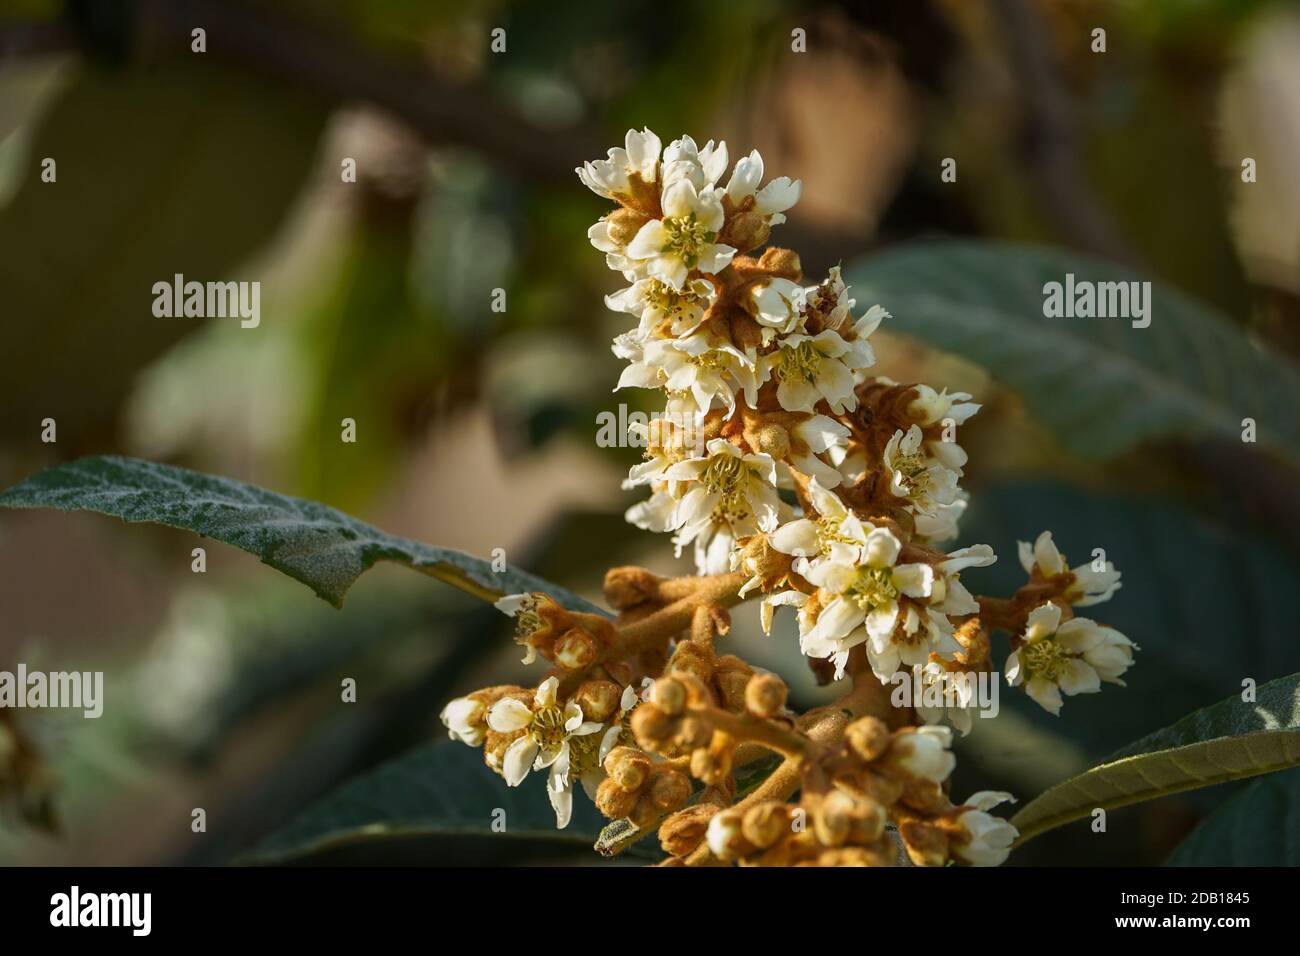 Blossom of Medlar or Nispero tree, loquat, flowers on tree, Spain. Stock Photo